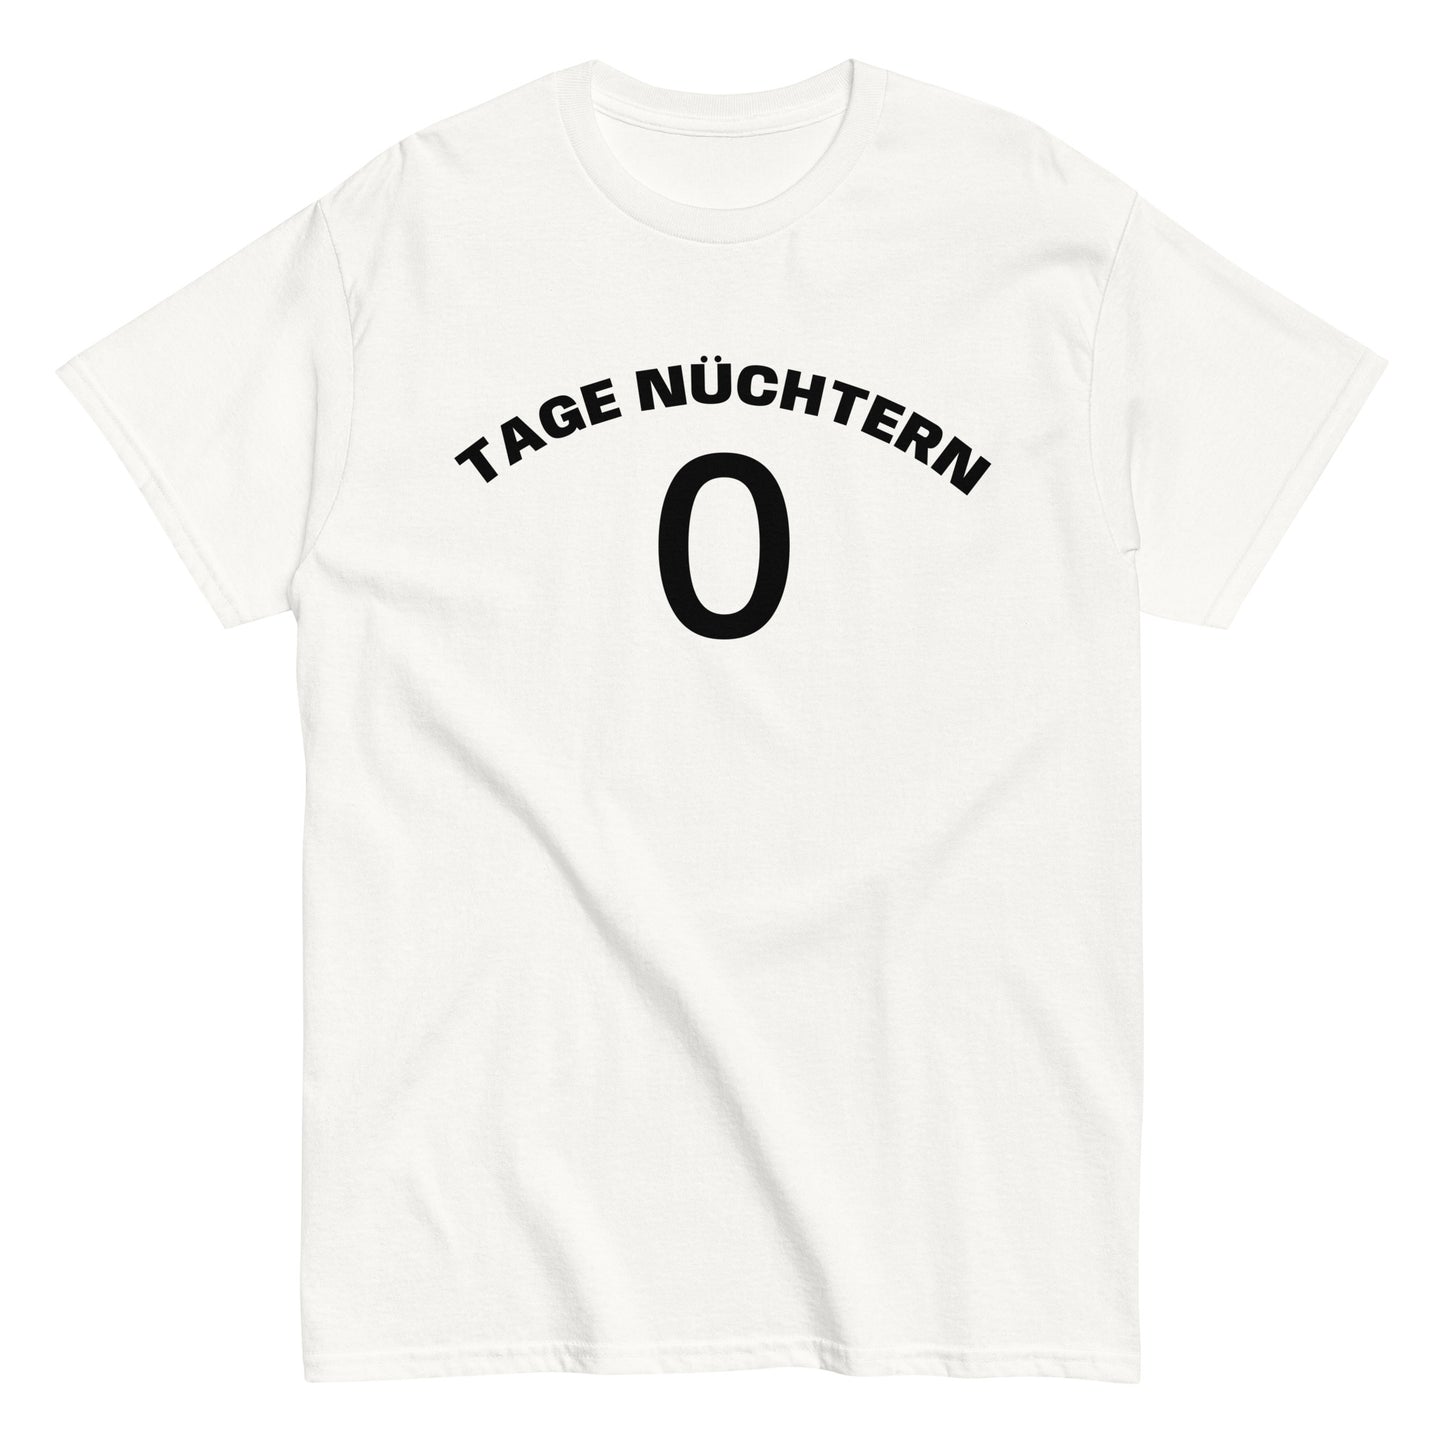 TAGE NÜCHTERN 0 T-Shirt